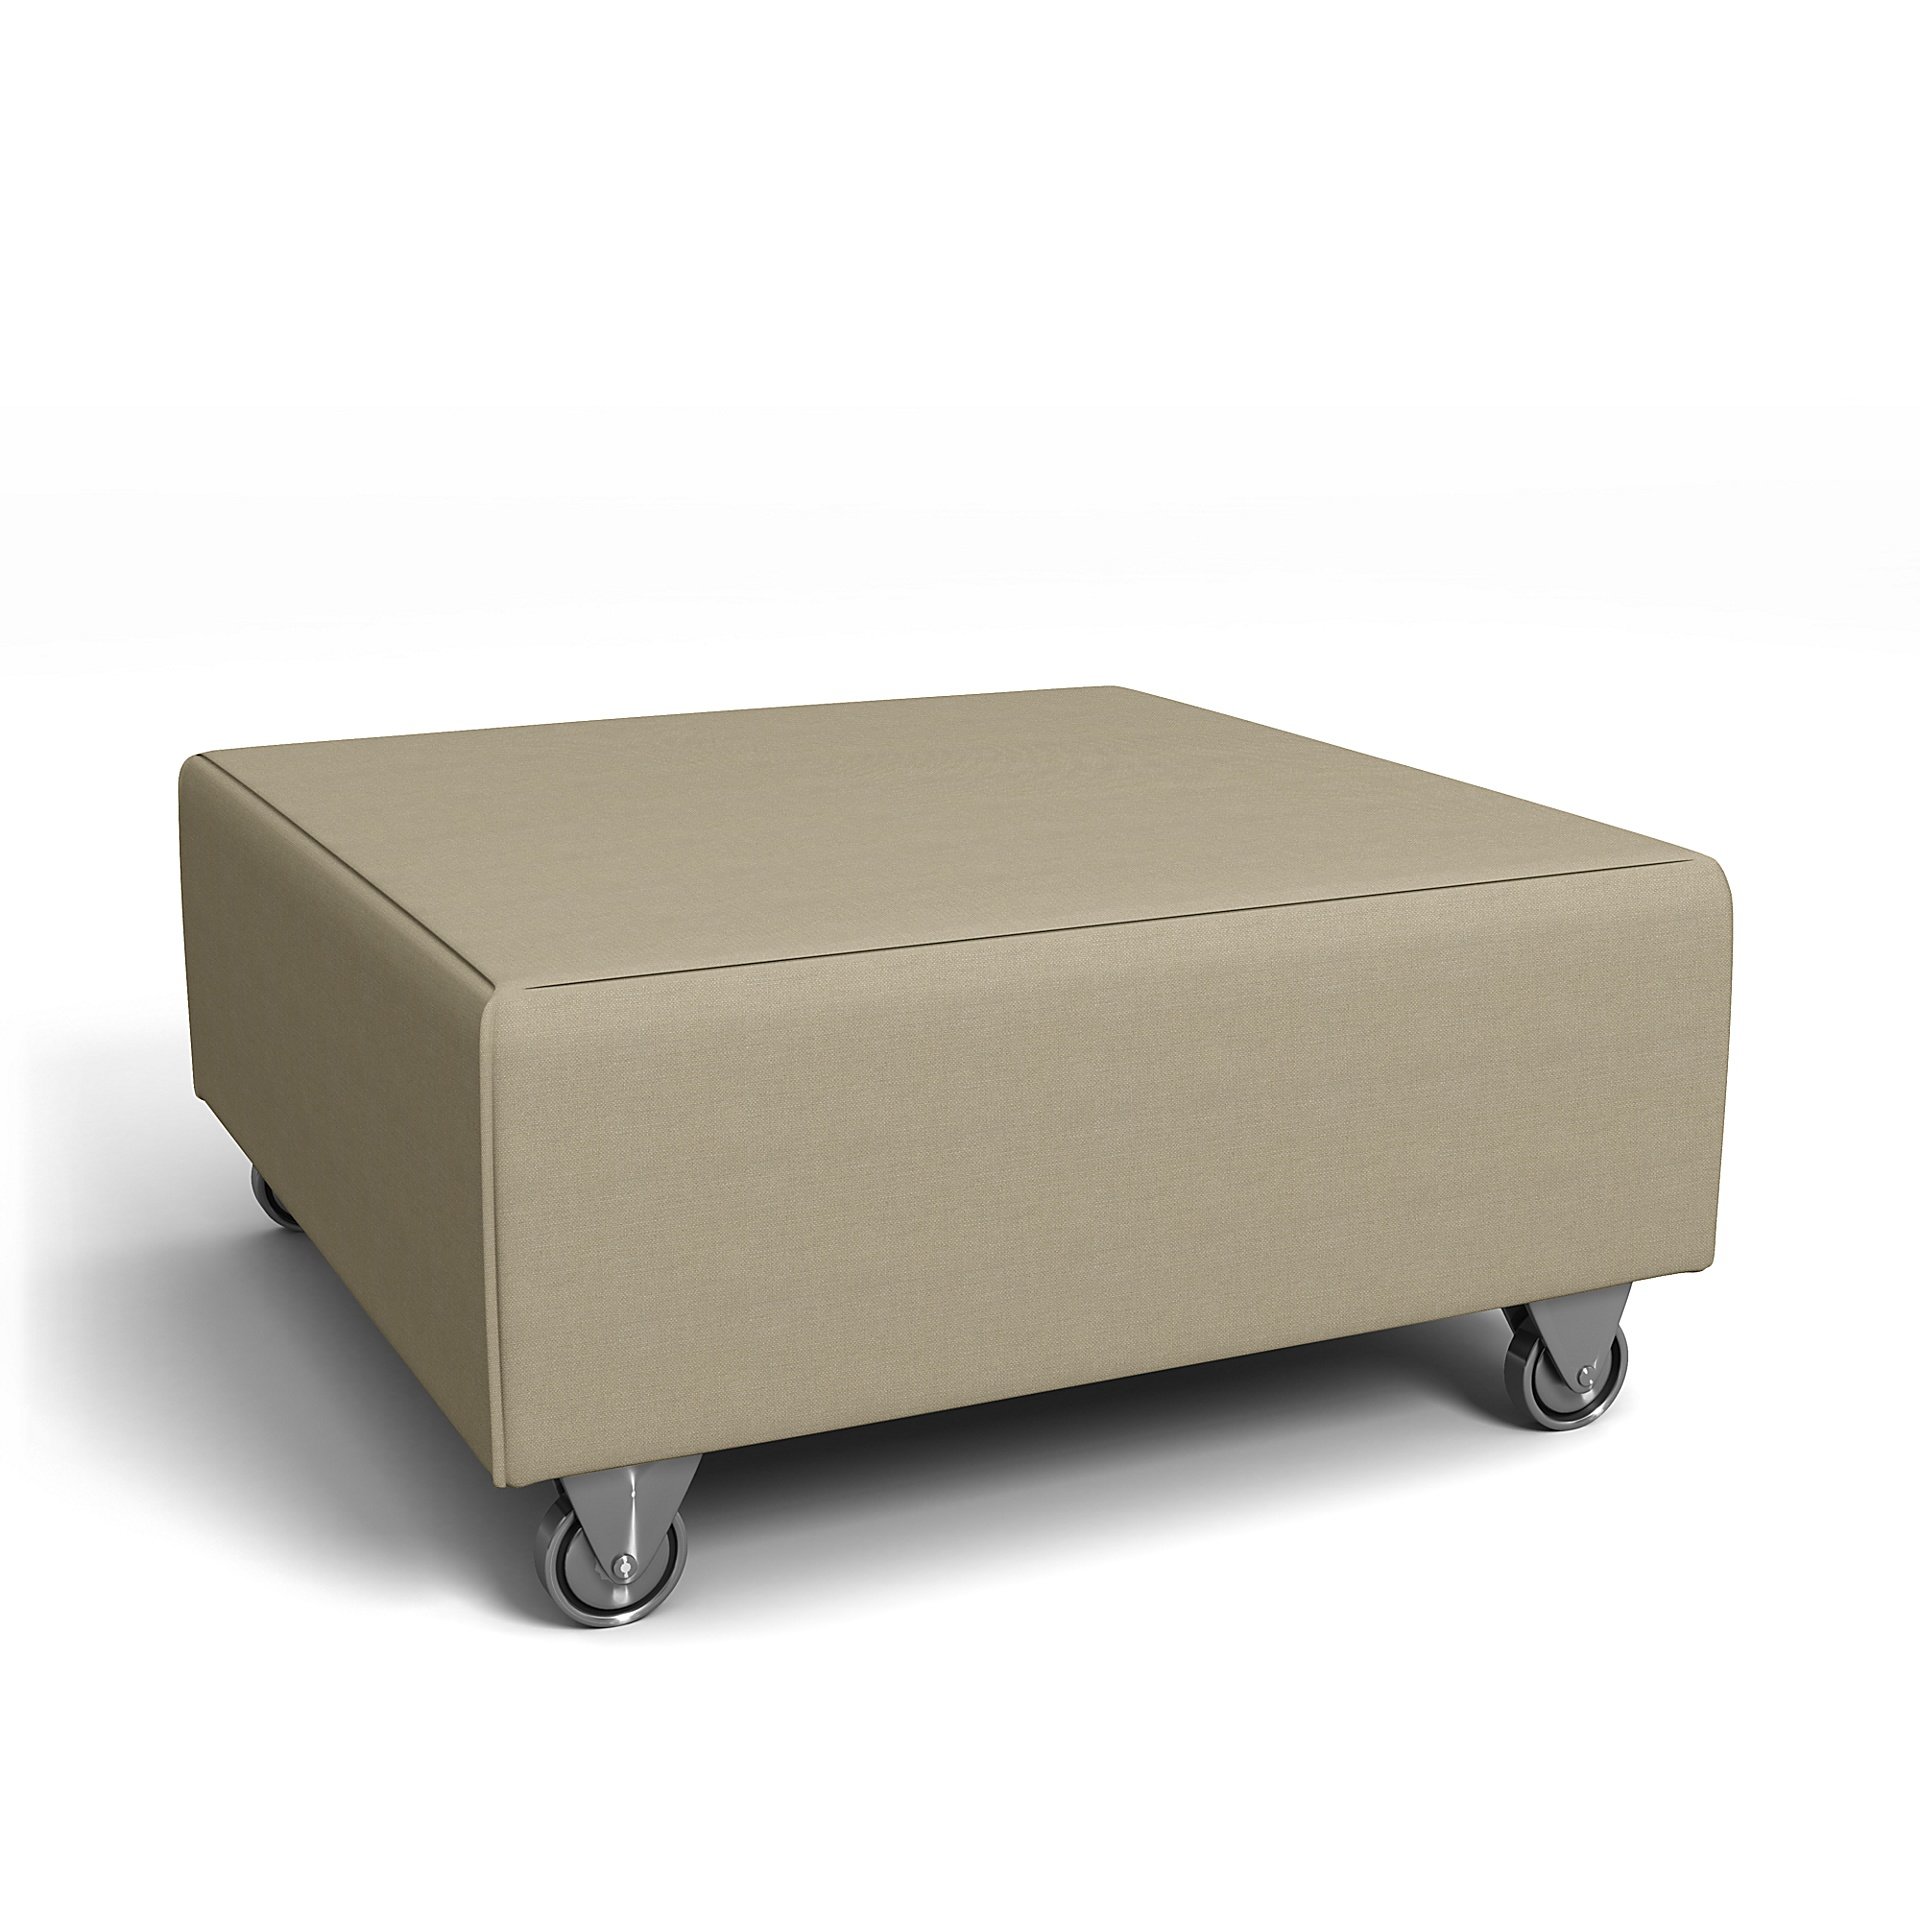 IKEA - Falsterbo Footstool Cover, Tan, Linen - Bemz